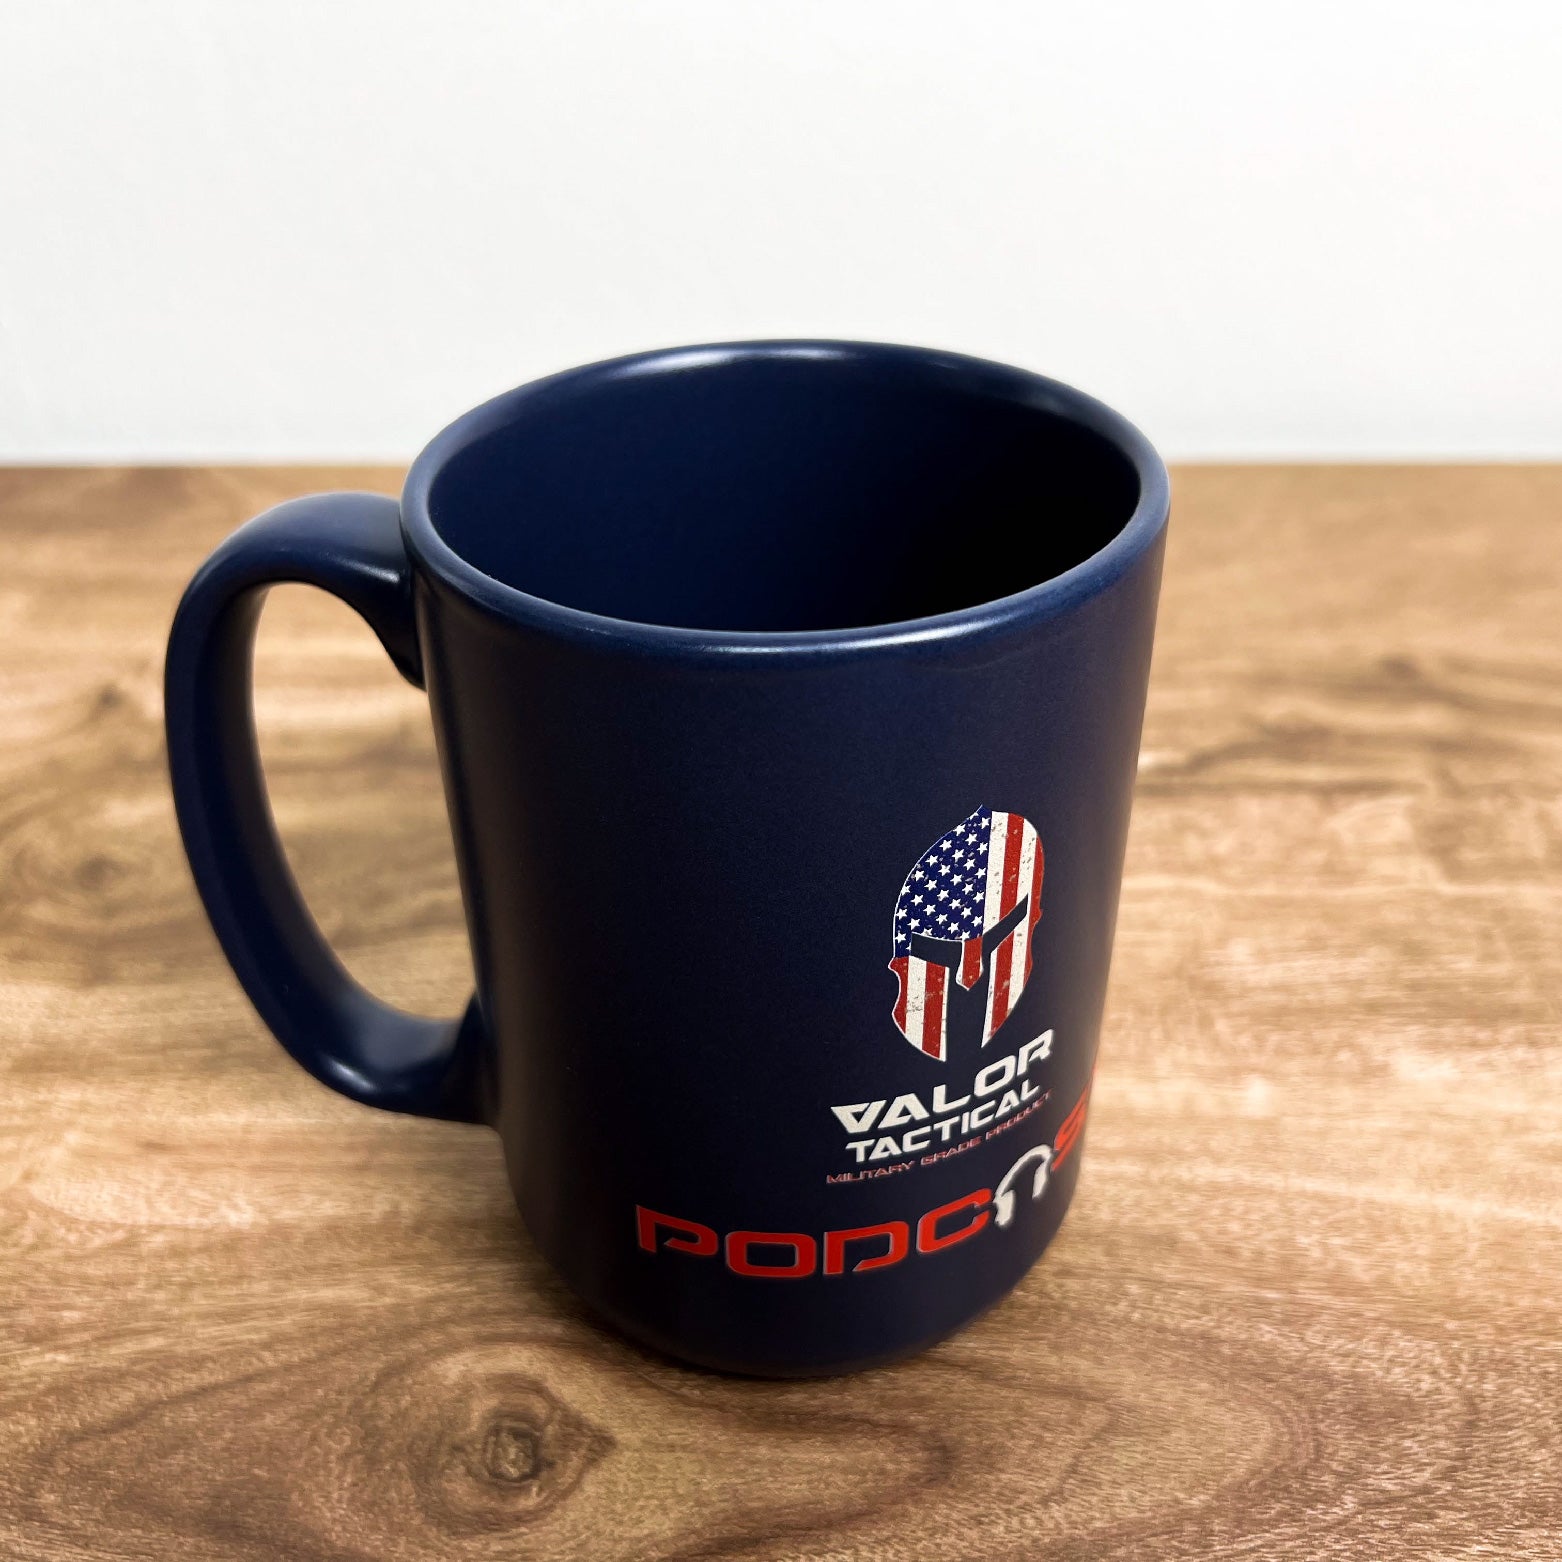 VALOR PX - แก้วกาแฟ - VALOR PODCAST [NAVY] Ceramic Mug